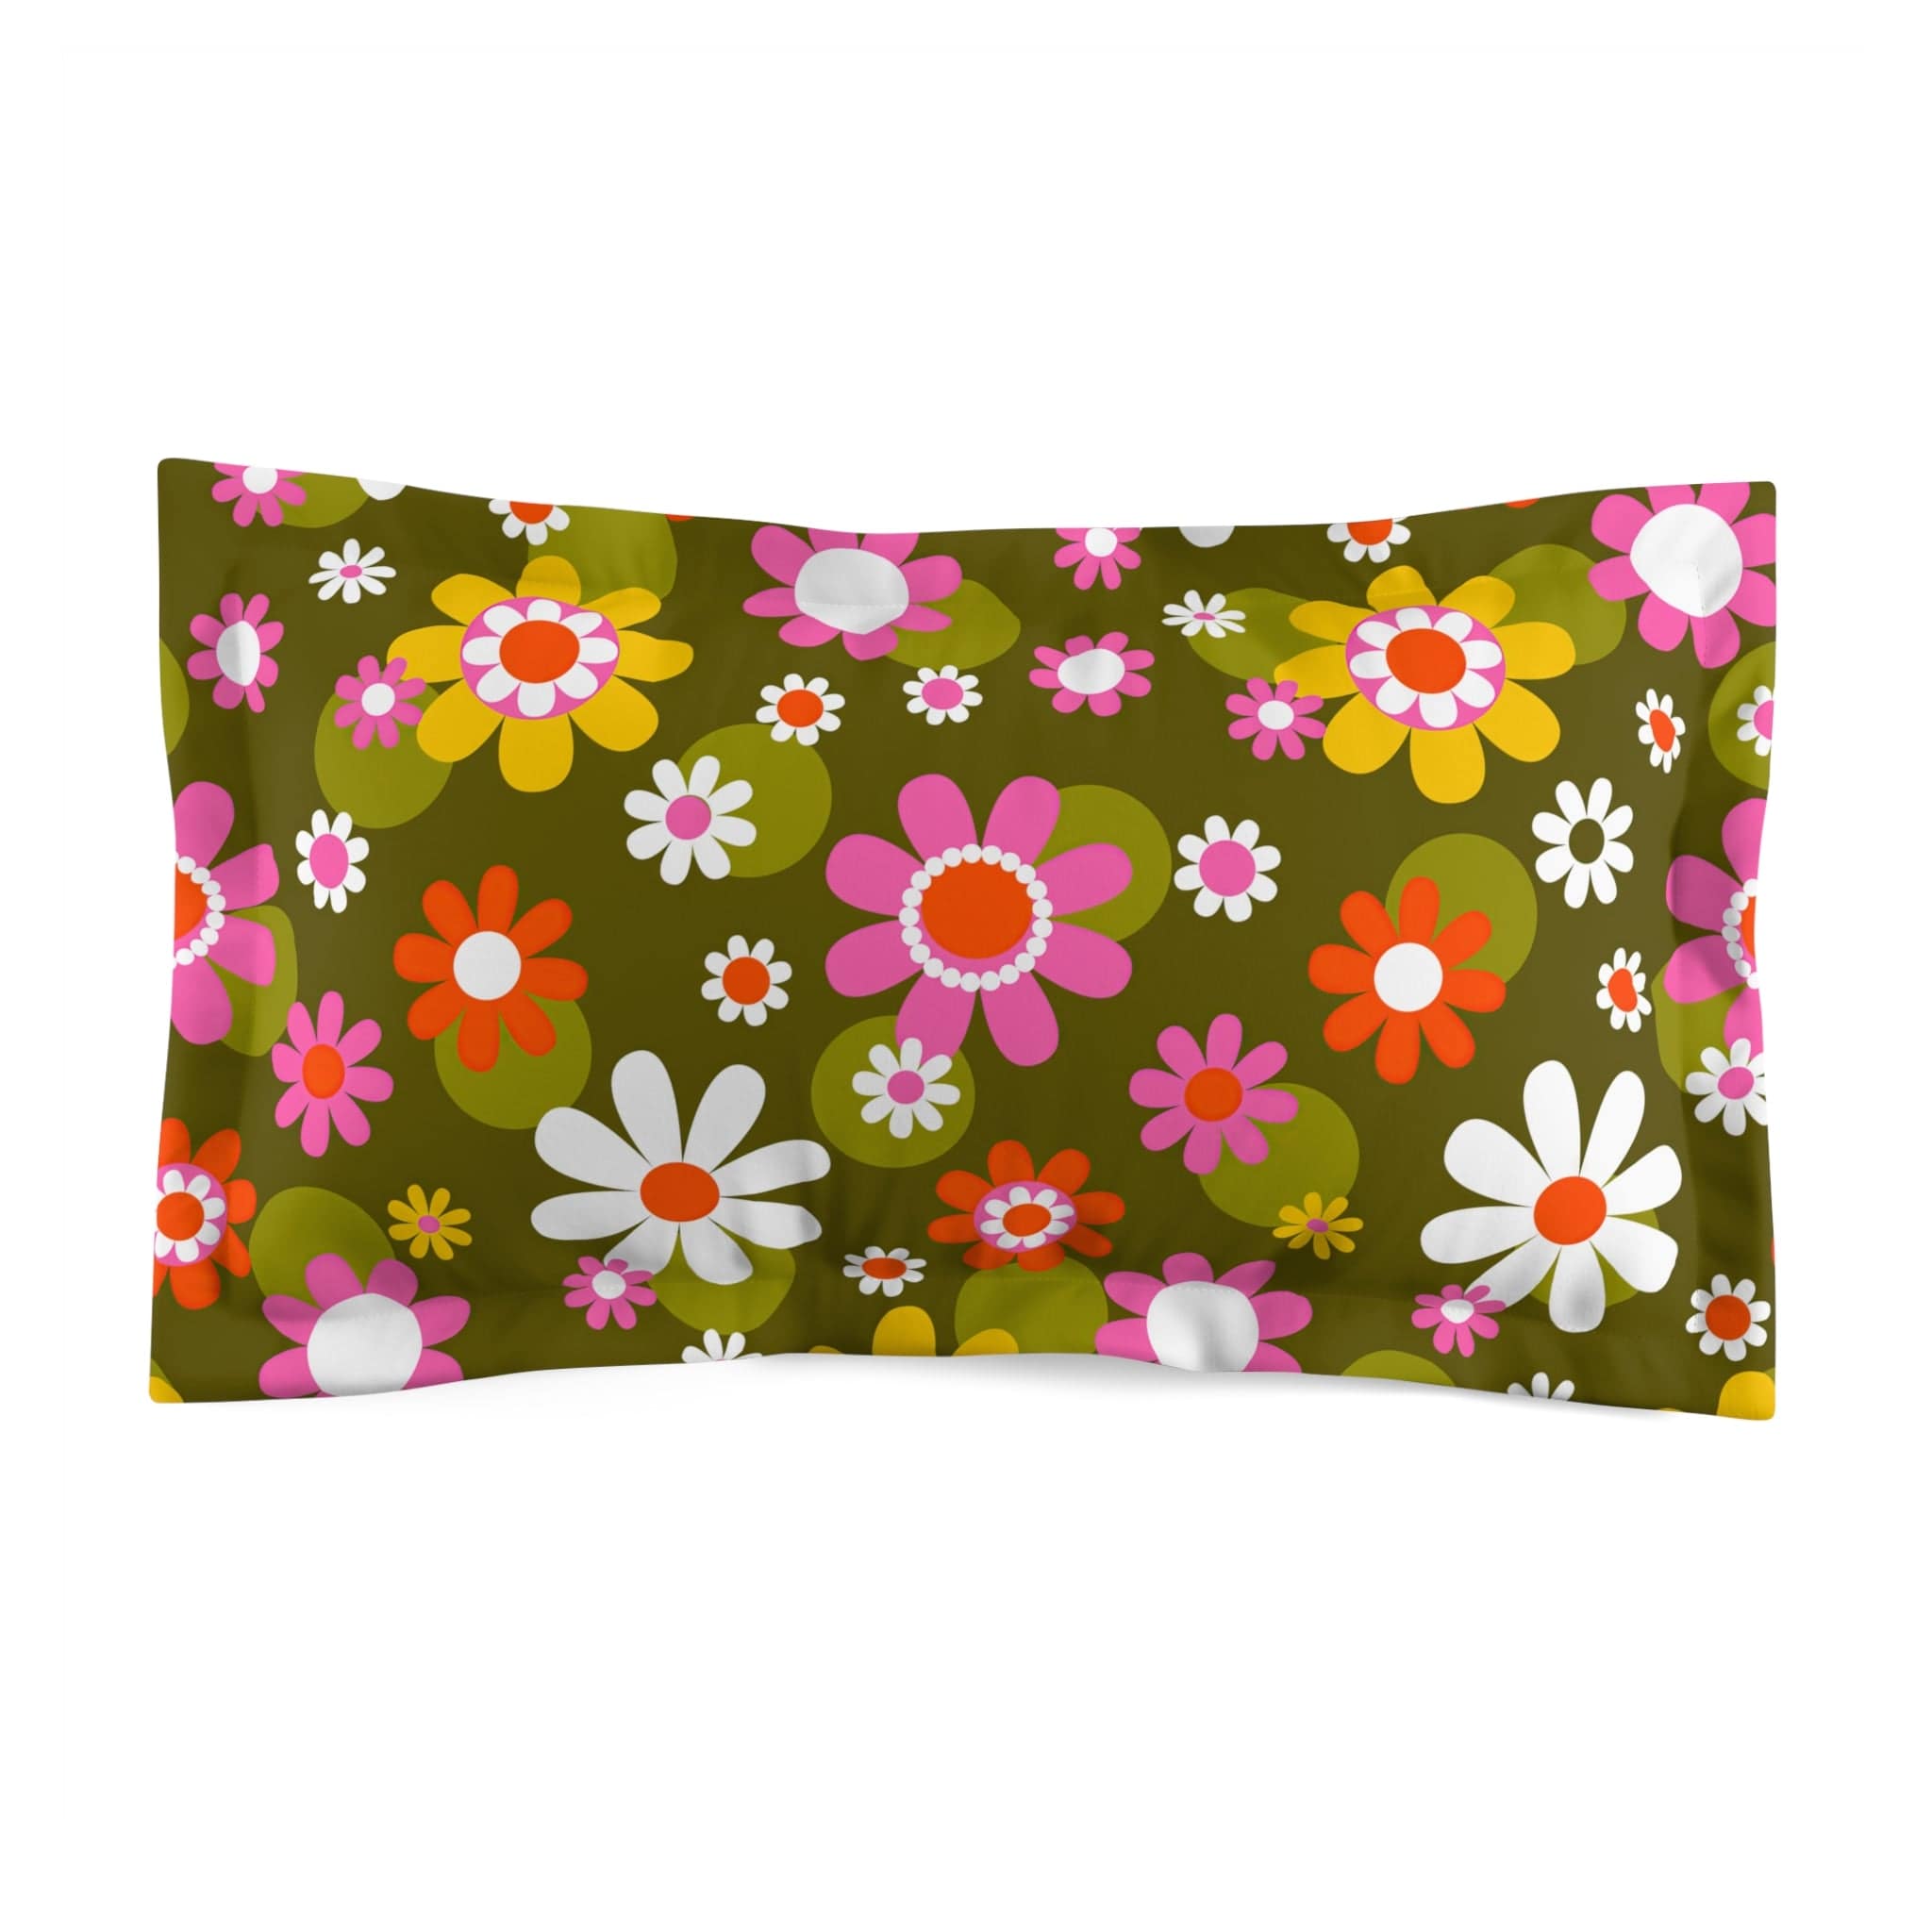 Kate McEnroe New York Groovy Hippie Daisy Flower Power Pillow Sham, Retro Mid Mod Green, Pink Floral Bedroom PillowPillow Shams29695007644042997454